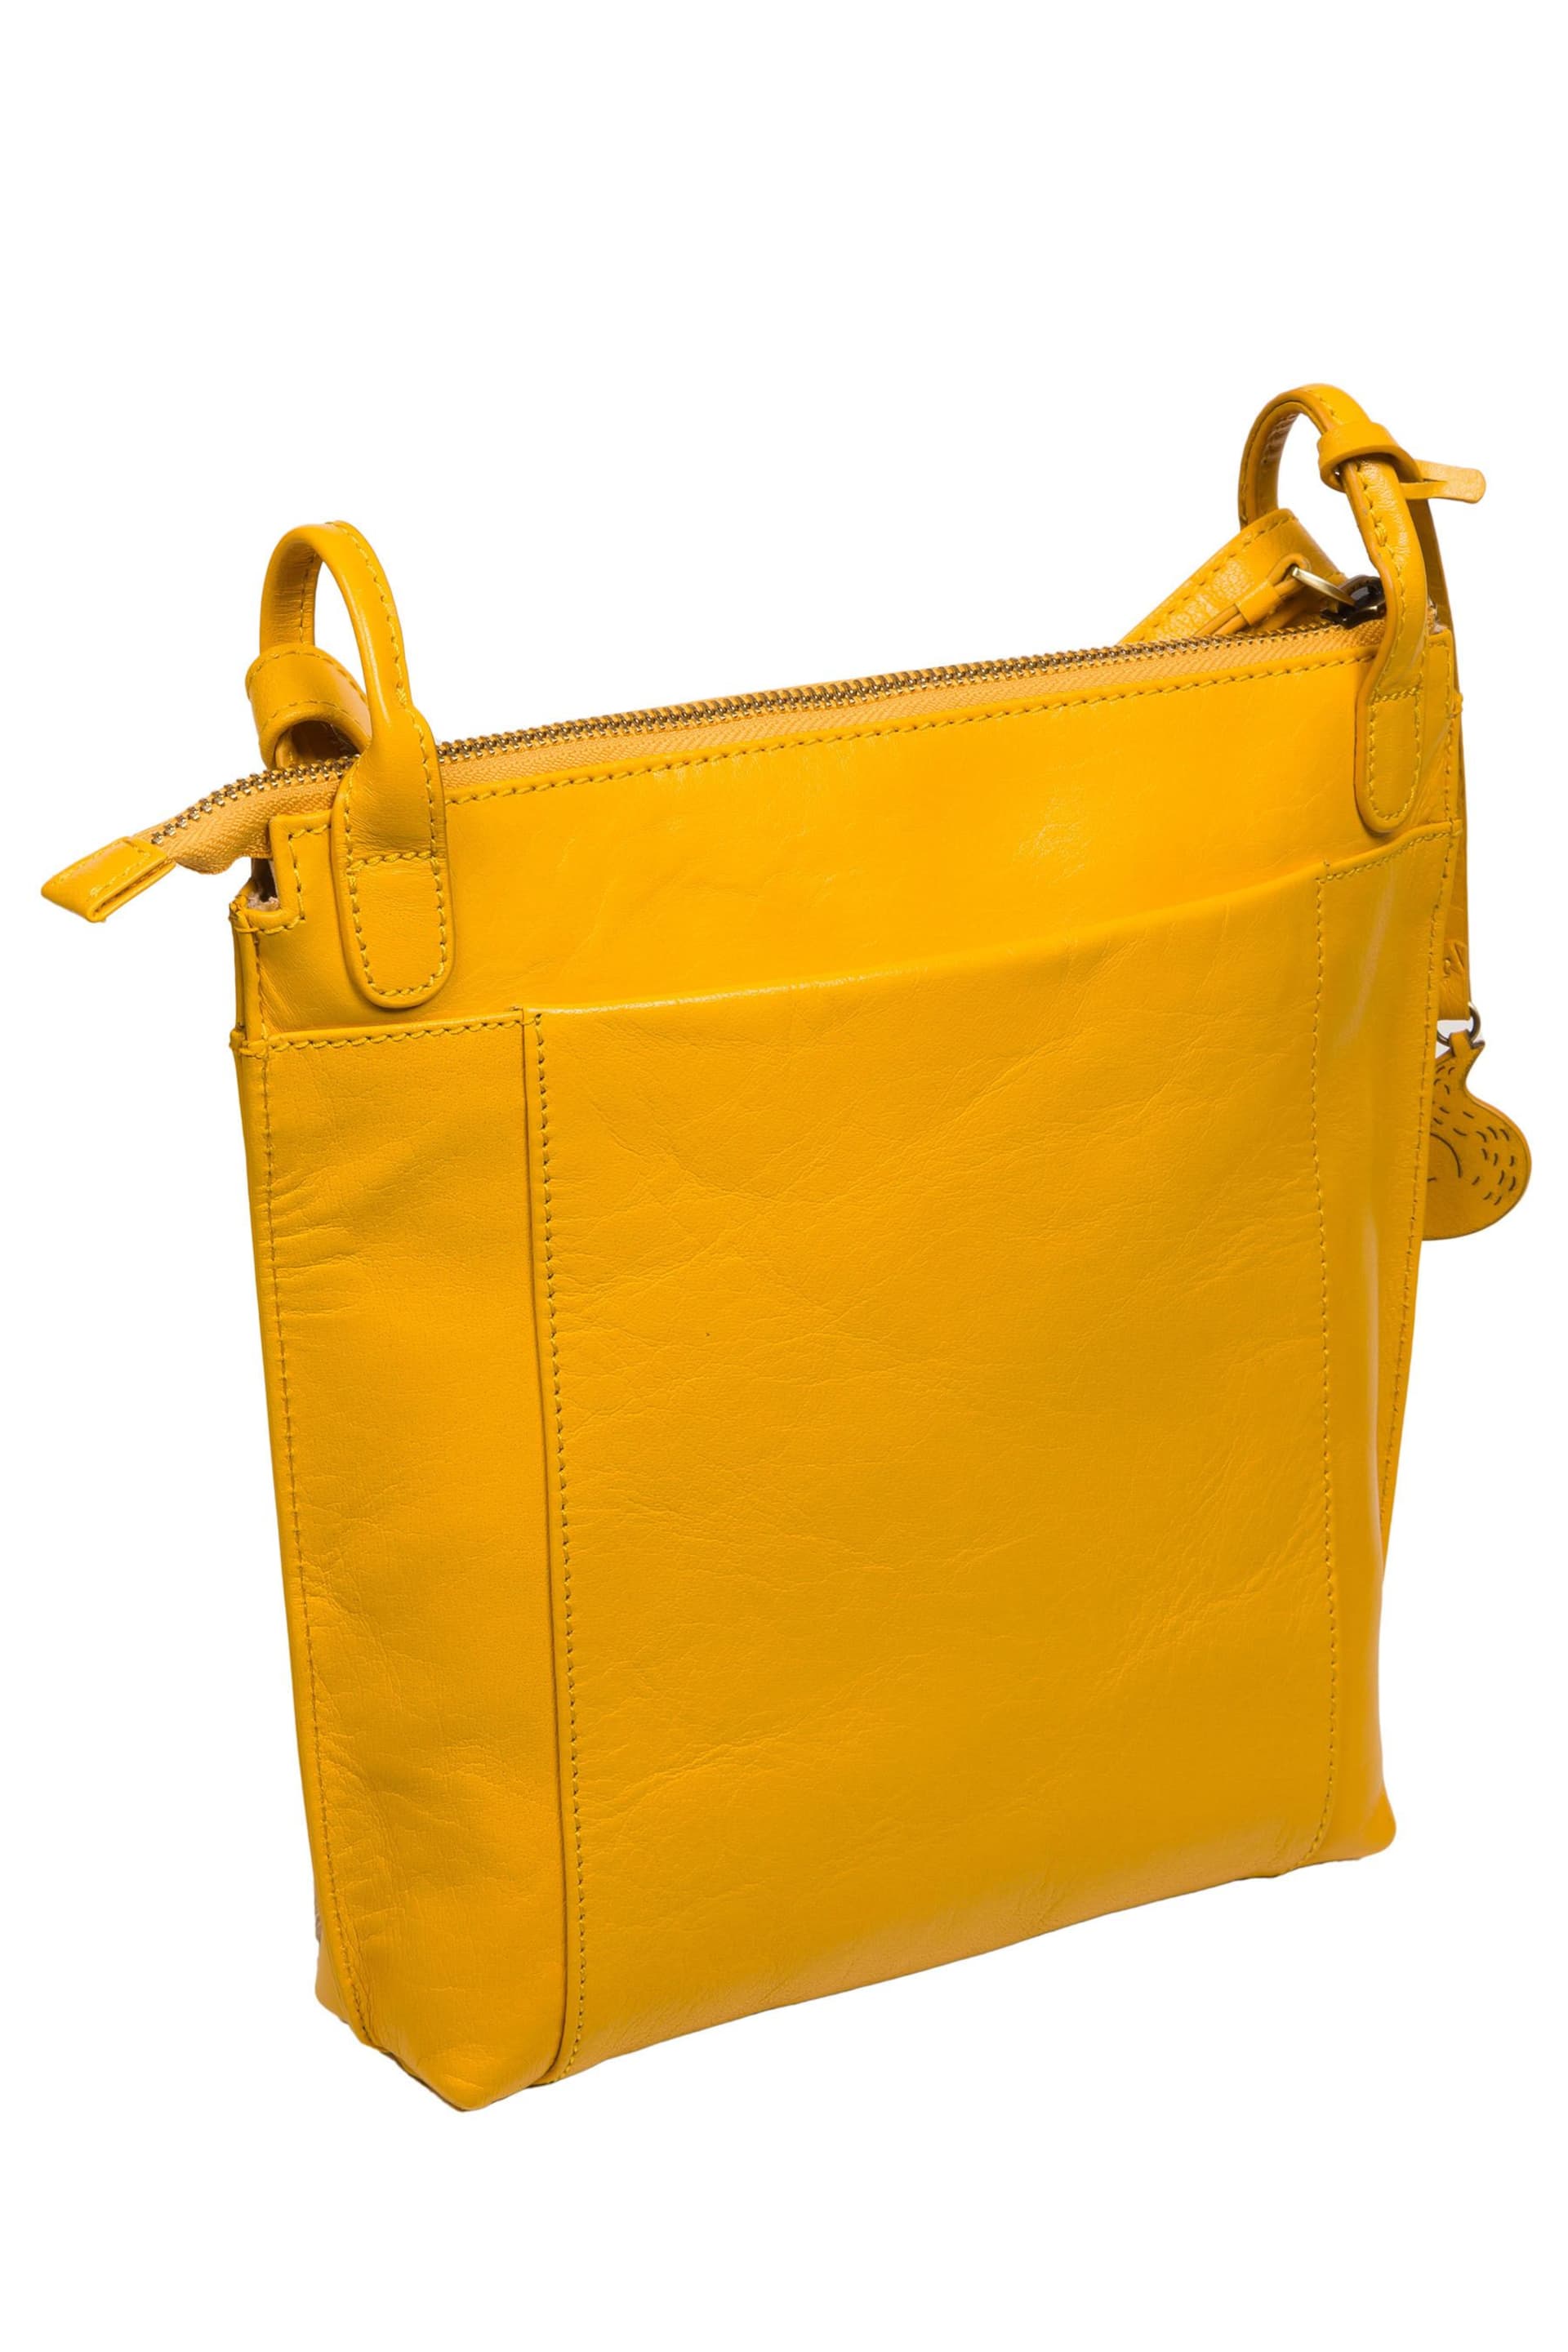 Conkca Rego Leather Cross Body Bag - Image 3 of 6